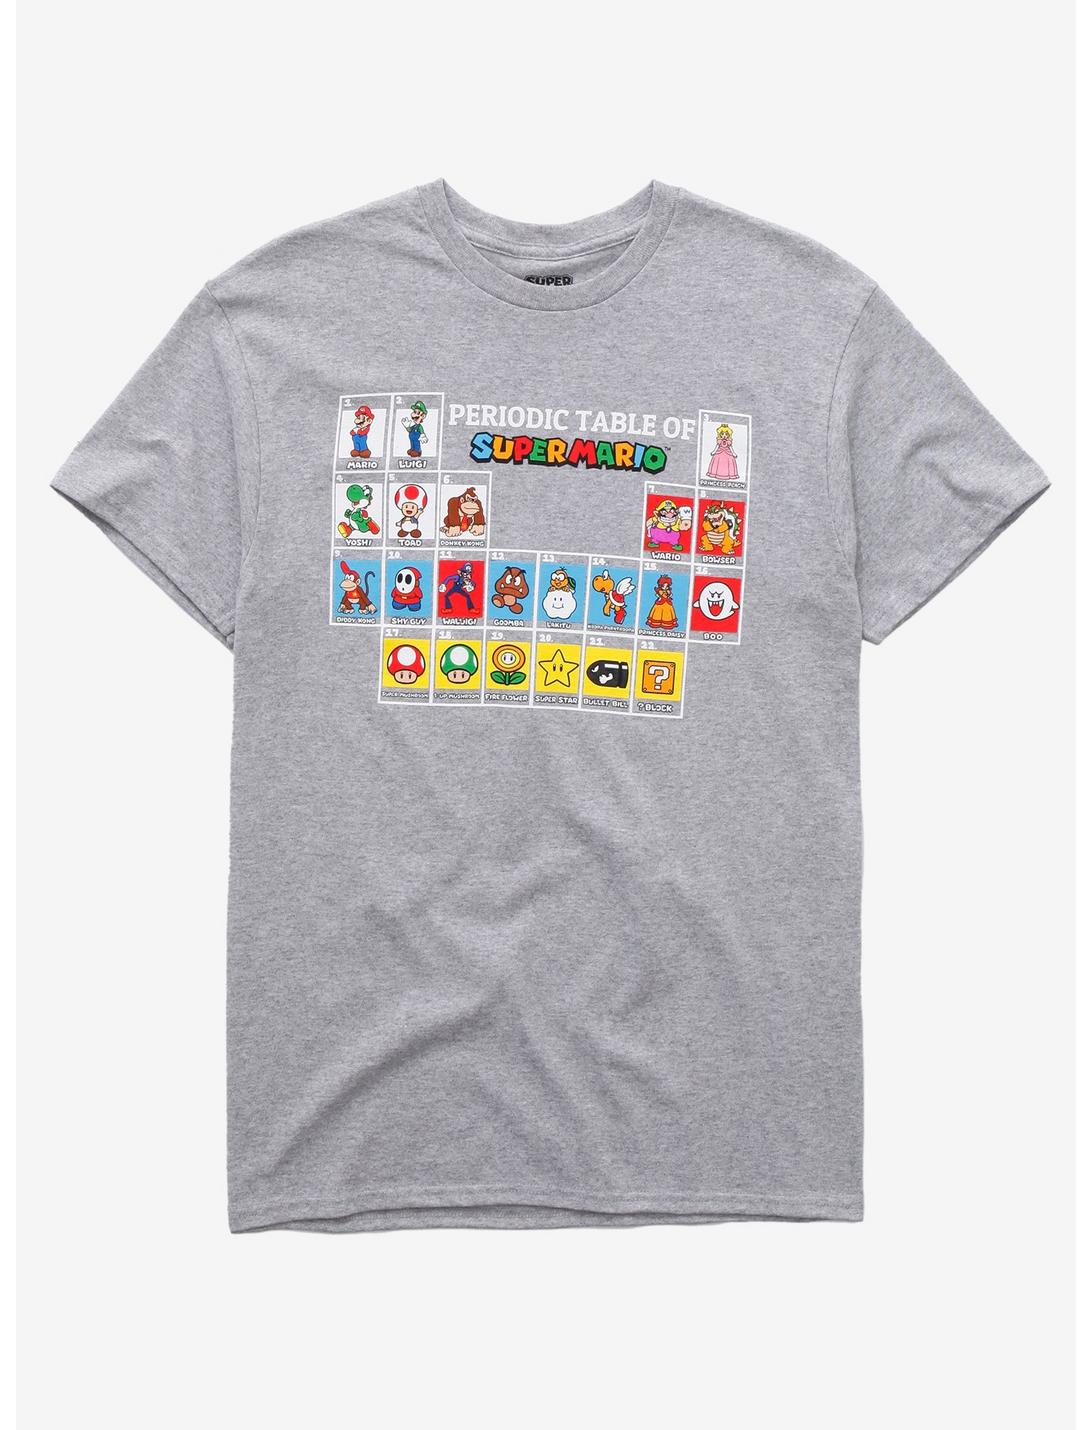 Super Mario Periodic Table T-Shirt, HEATHER, hi-res